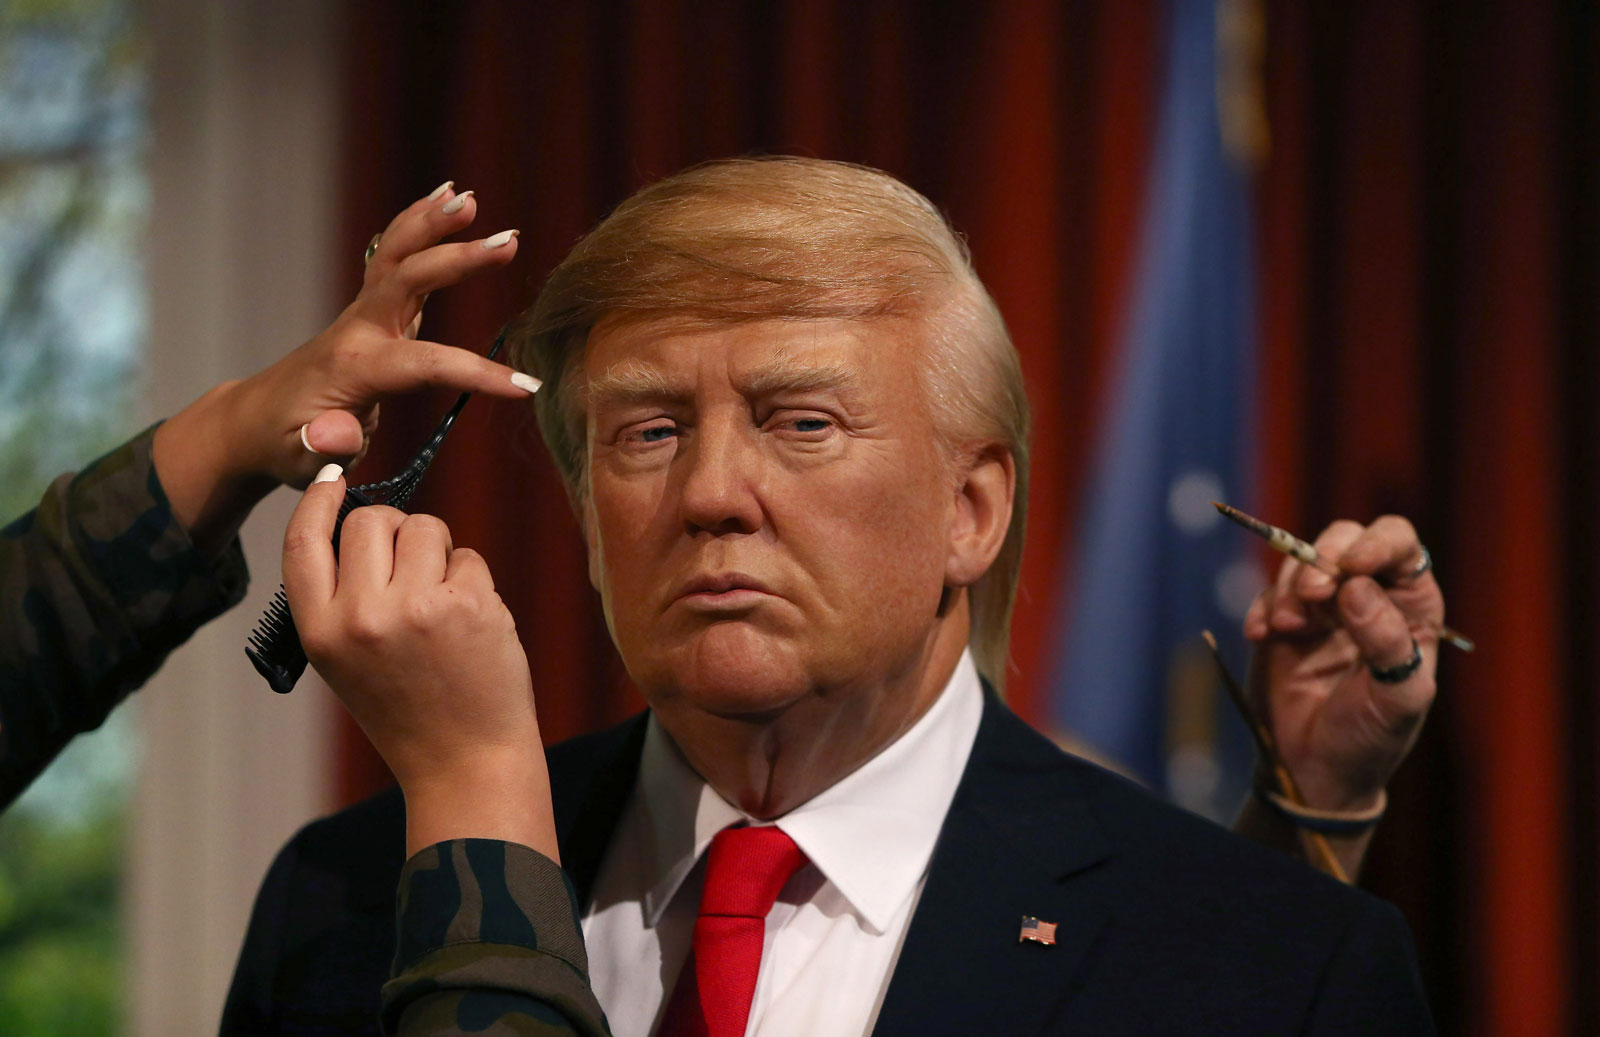 A waxwork of President Donald Trump, Madame Tussauds, London, January 18, 2017